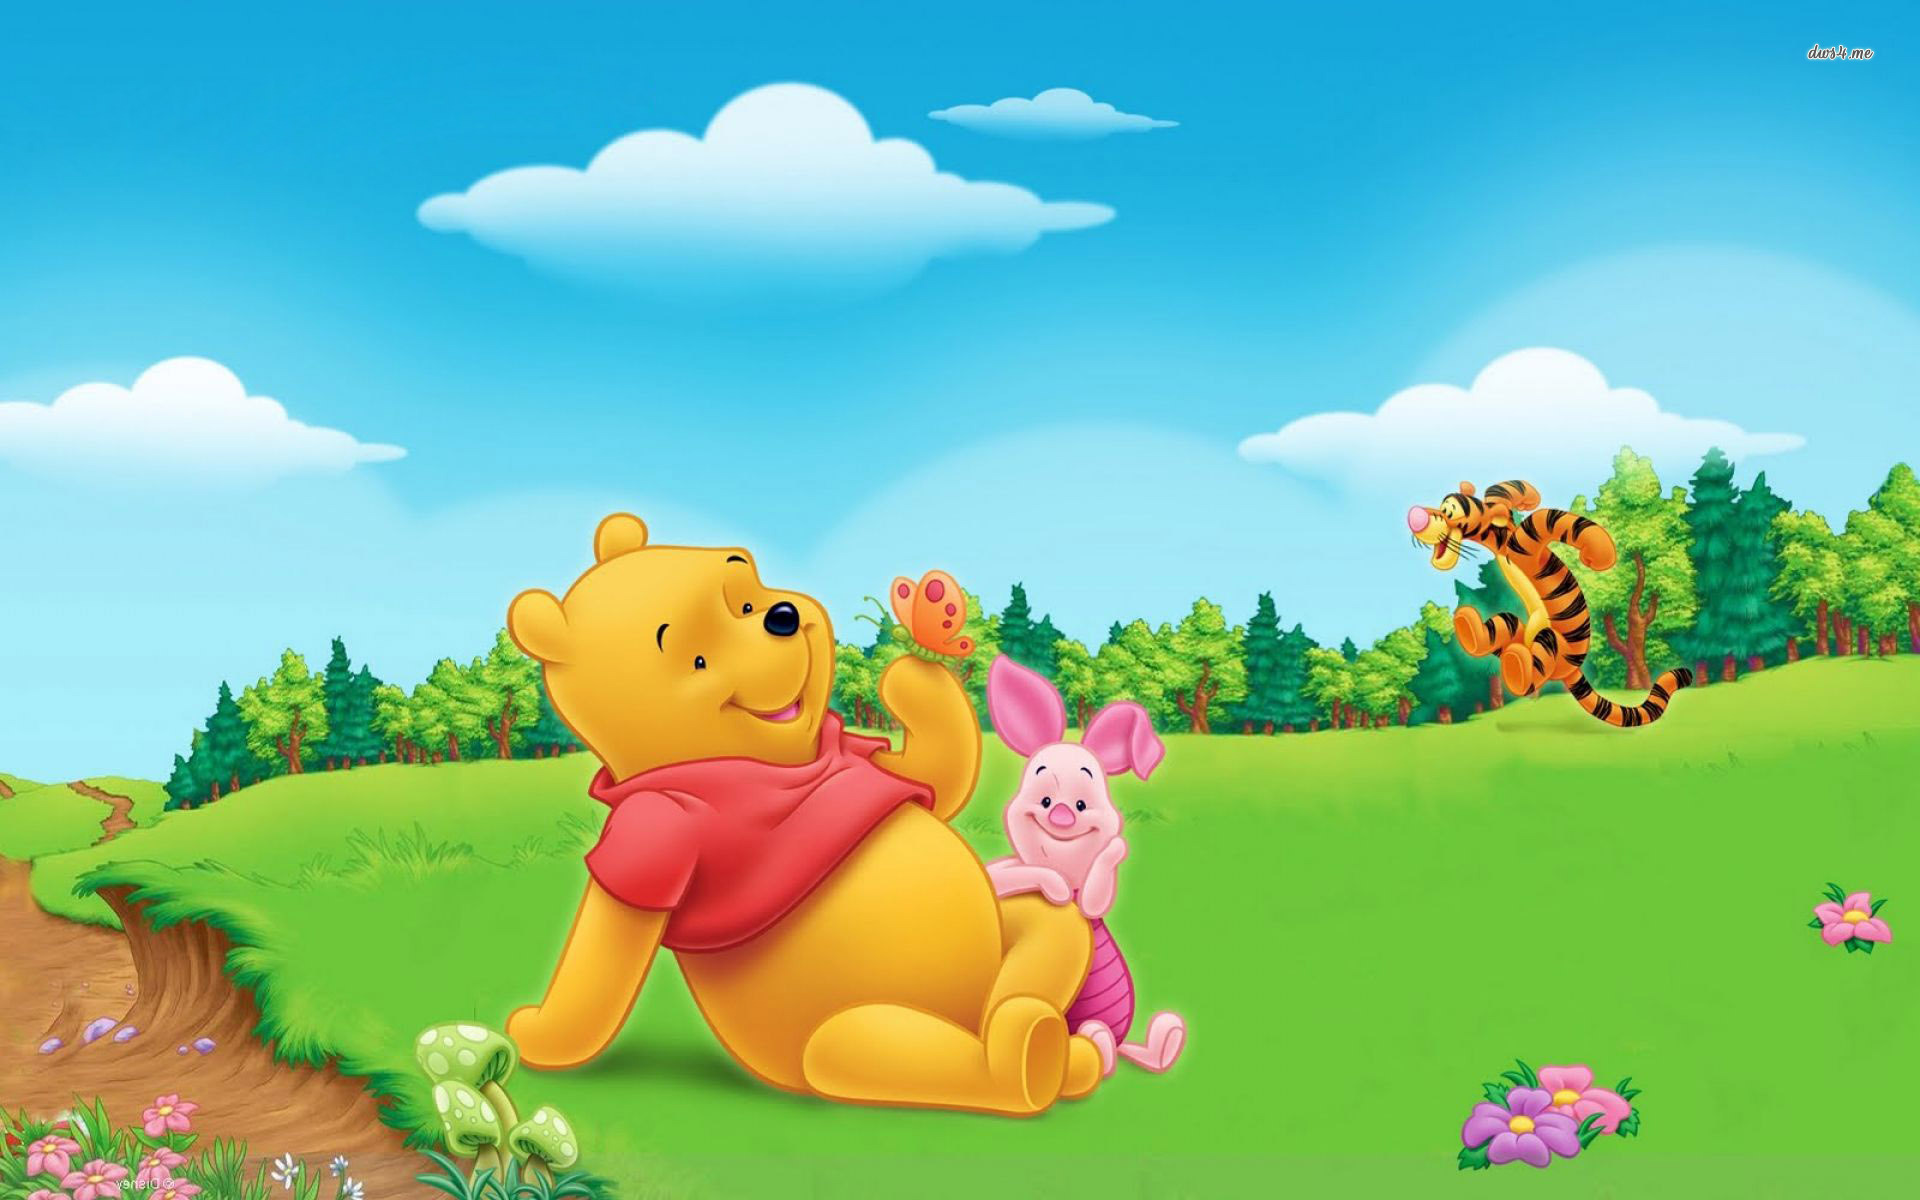  Disney Cartoon Winnie The Pooh Wallpaper HD 5   SiWallpaperHD 3218